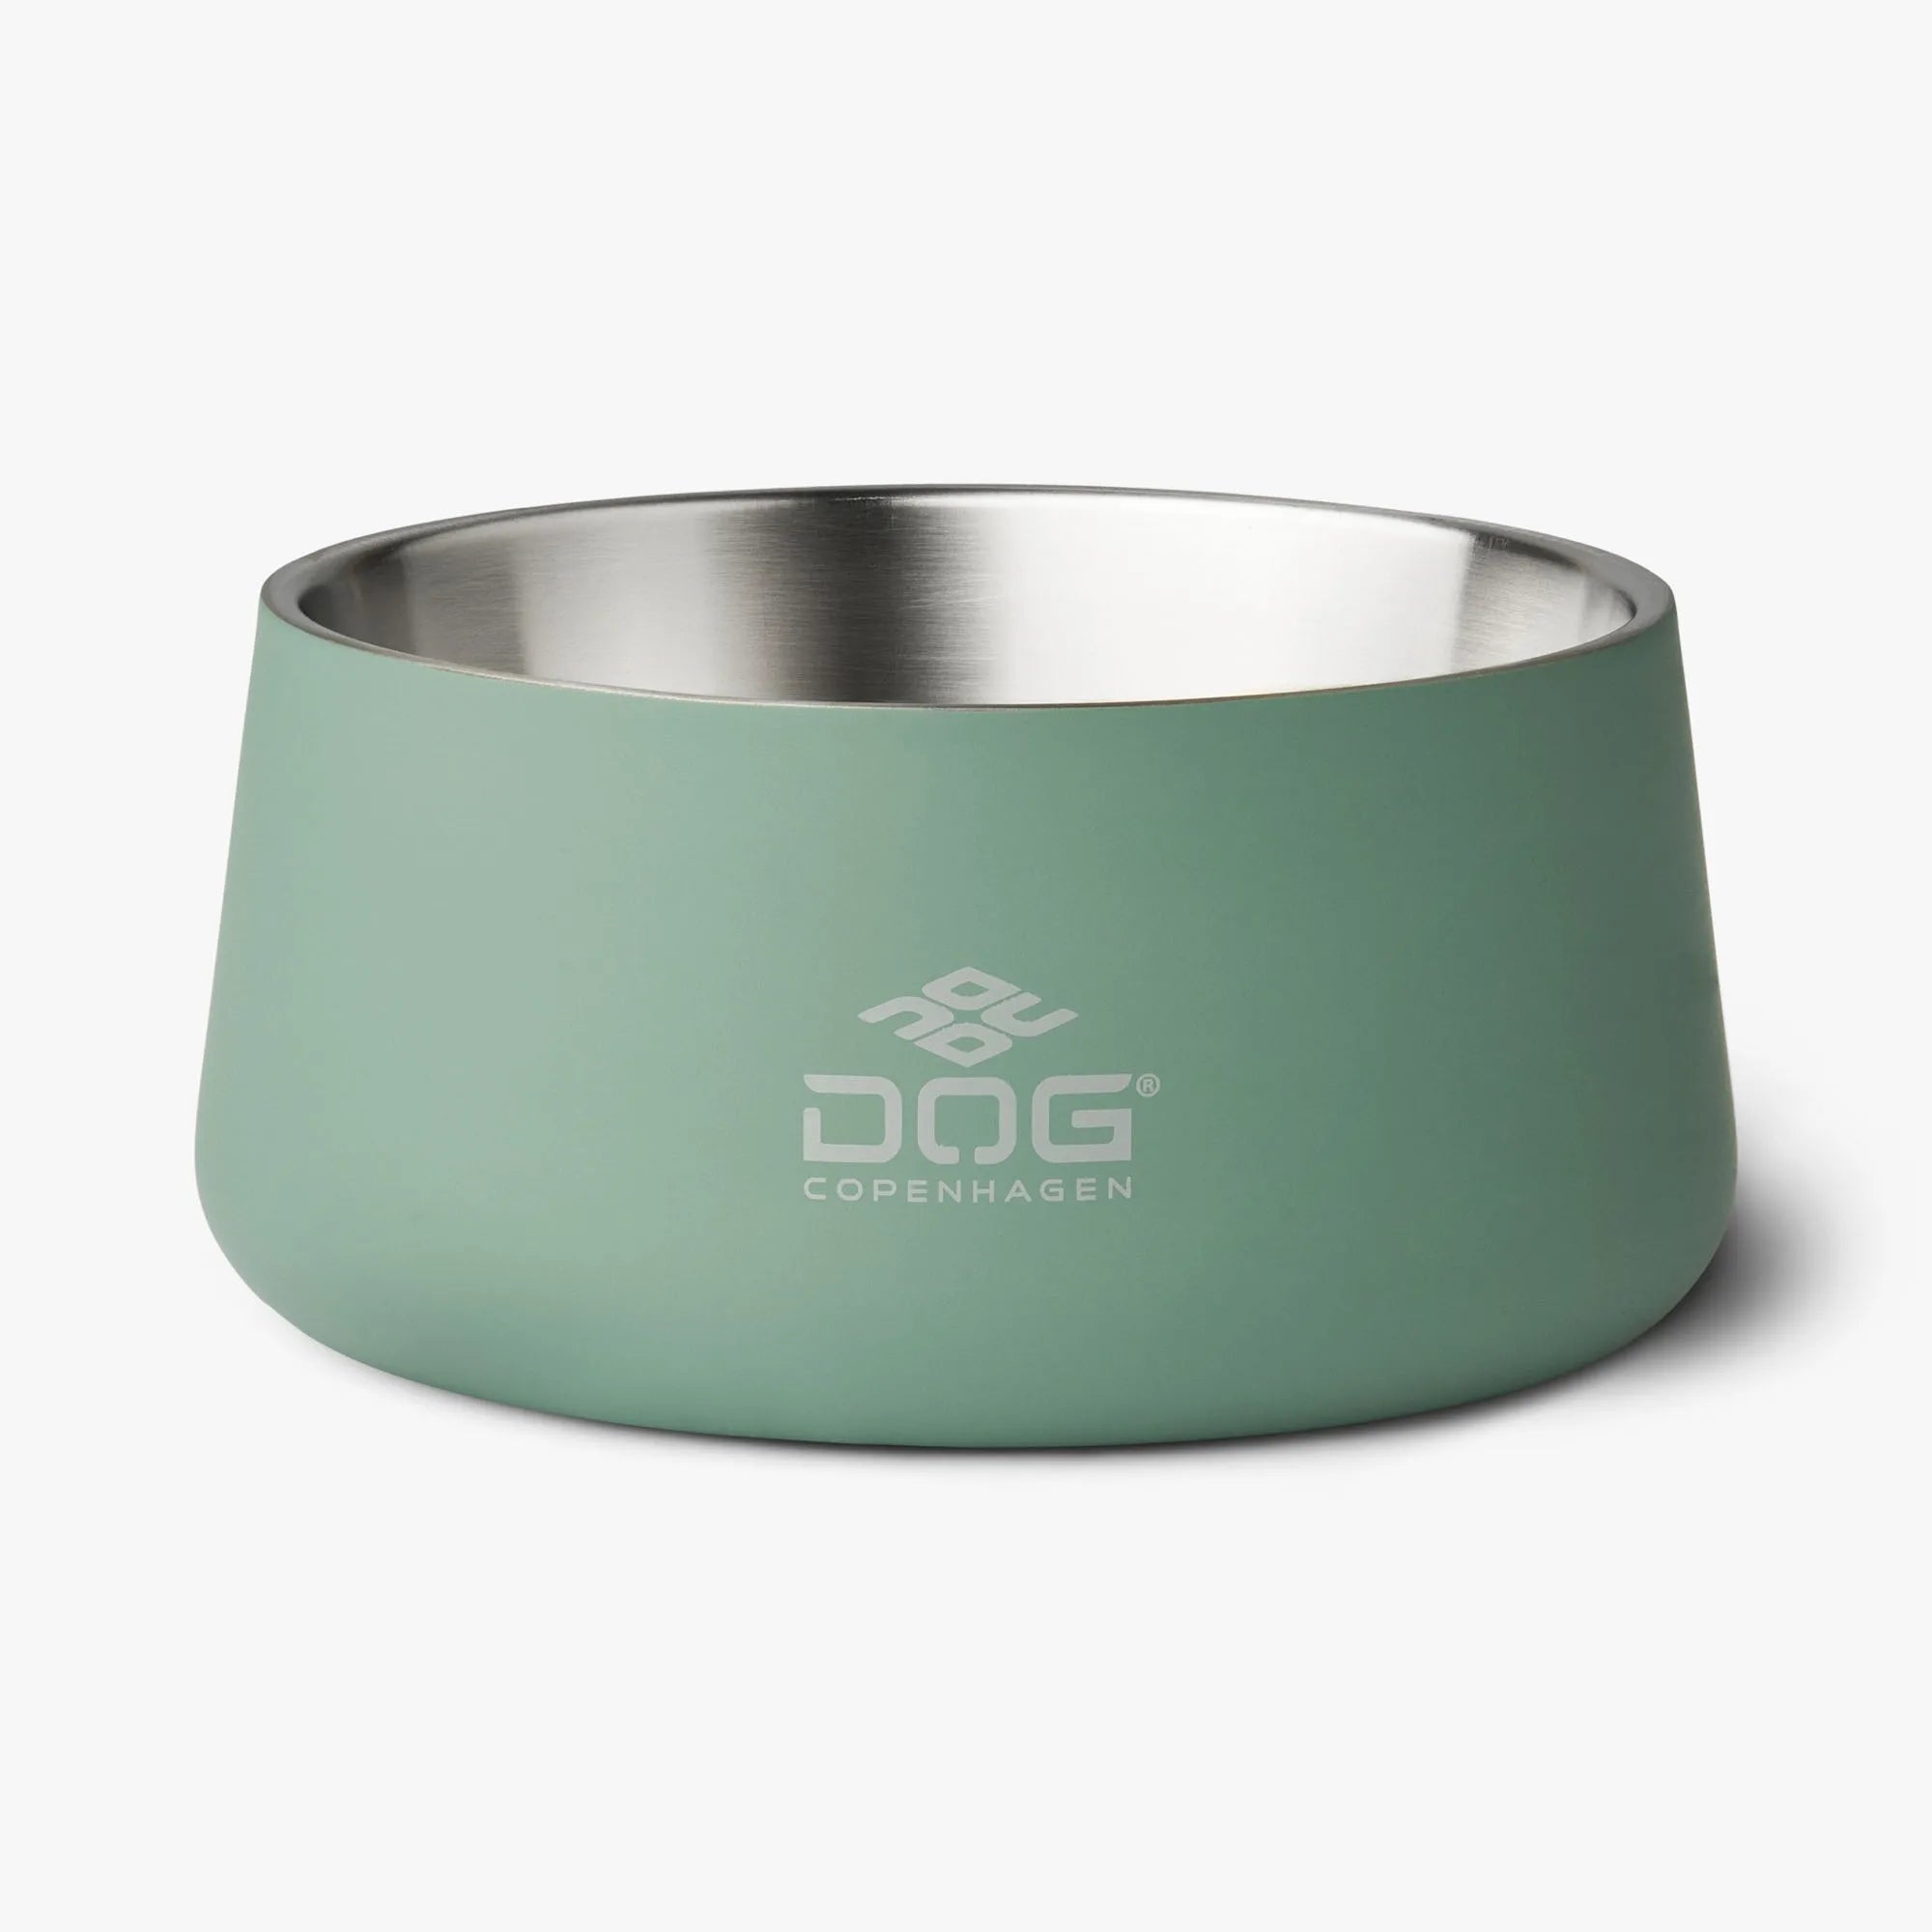 Se Dog copenhagen - DOG Copenhagen Vega Skål, Farve : Mintgrøn - 700ml - Pet Bowls, Feeders & Waterers hos Petpower.dk